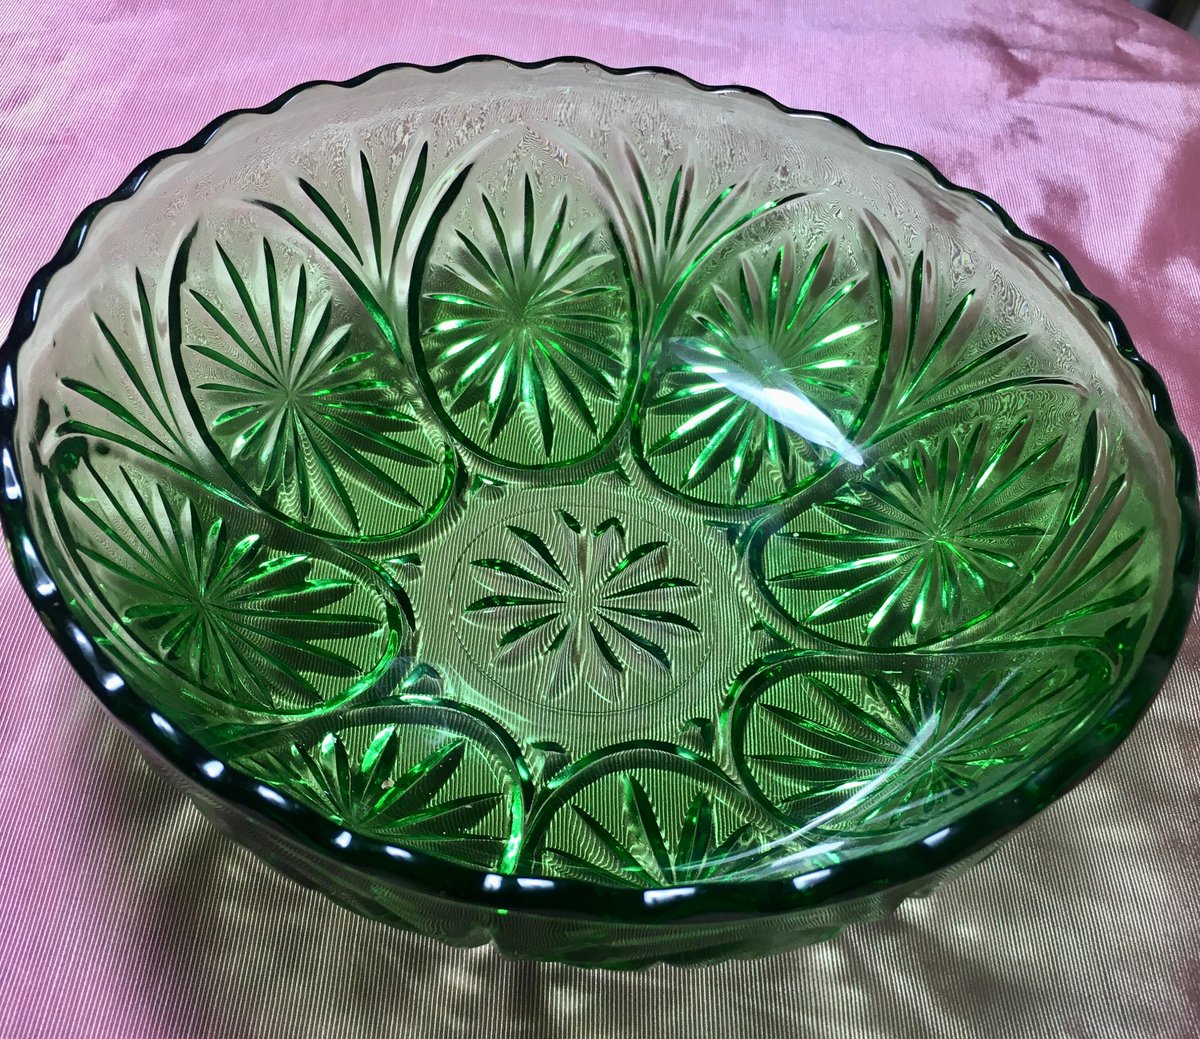 Vintage Green Depression Glass Bowl, Scalloped Rim Bowl, Starburst Design. Vintage 8 inch Serving Bowl tuppu.net/131a7eba #vintage #Etsy #AntiquesAtlanta #GreenGlassBowl